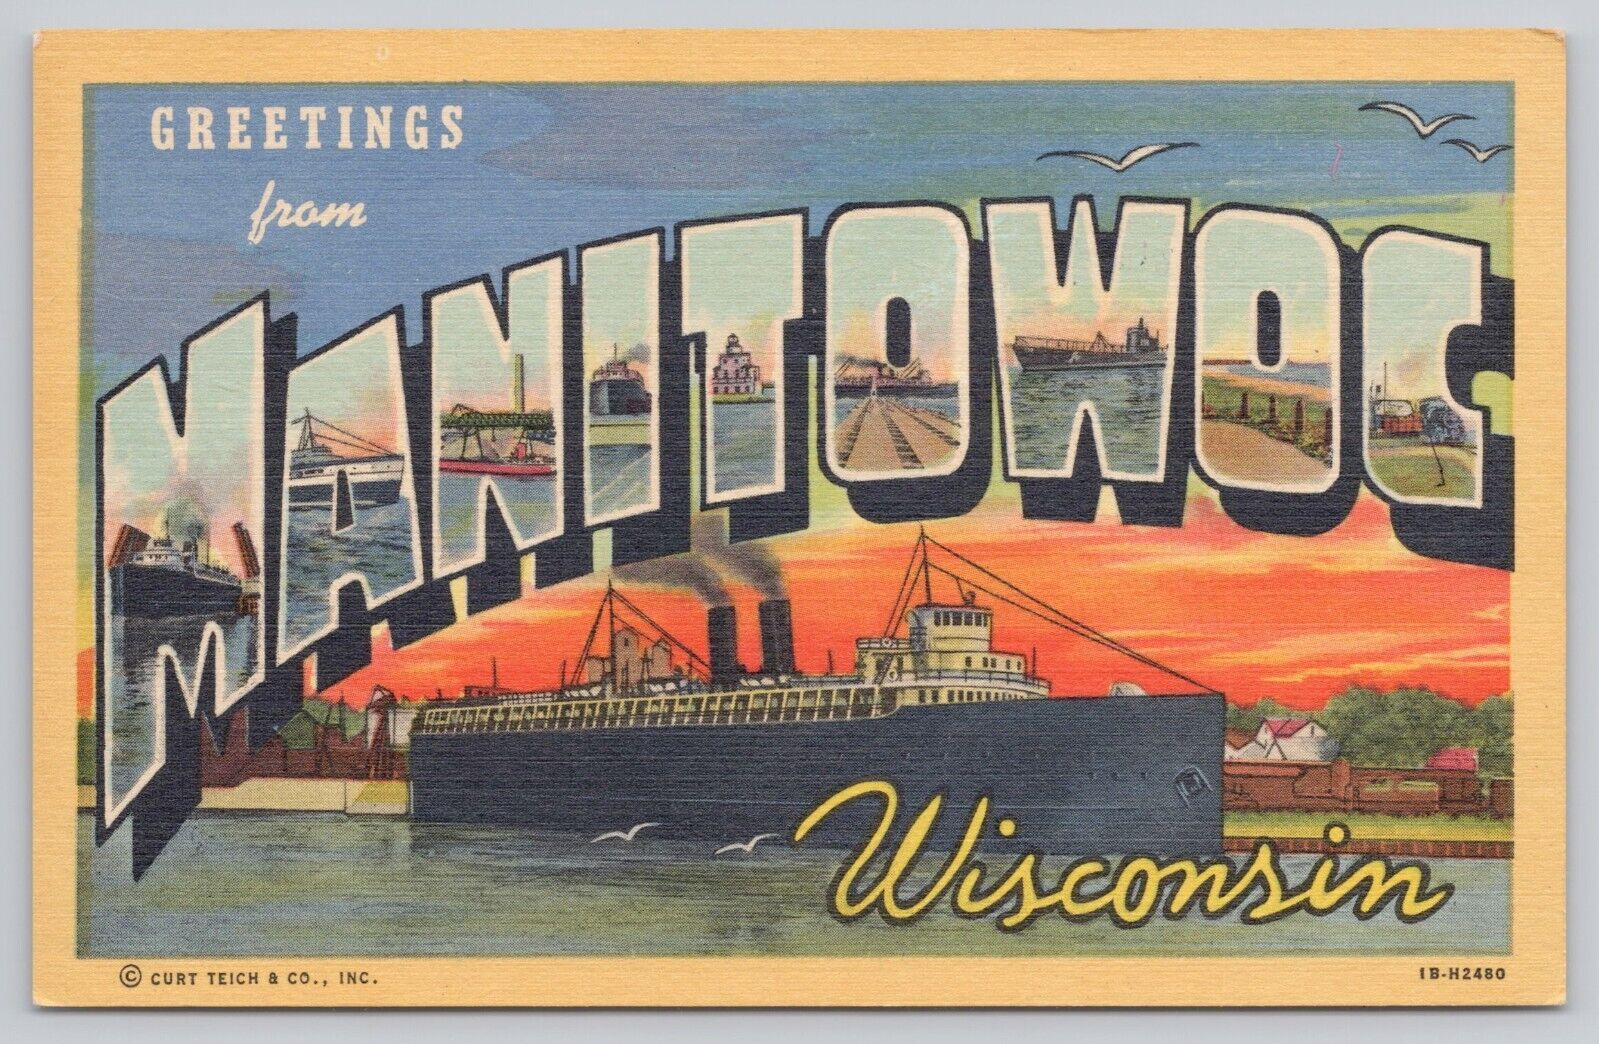 Manitowoc Wisconsin, Large Letter Greetings Passenger Ship, Vintage Postcard